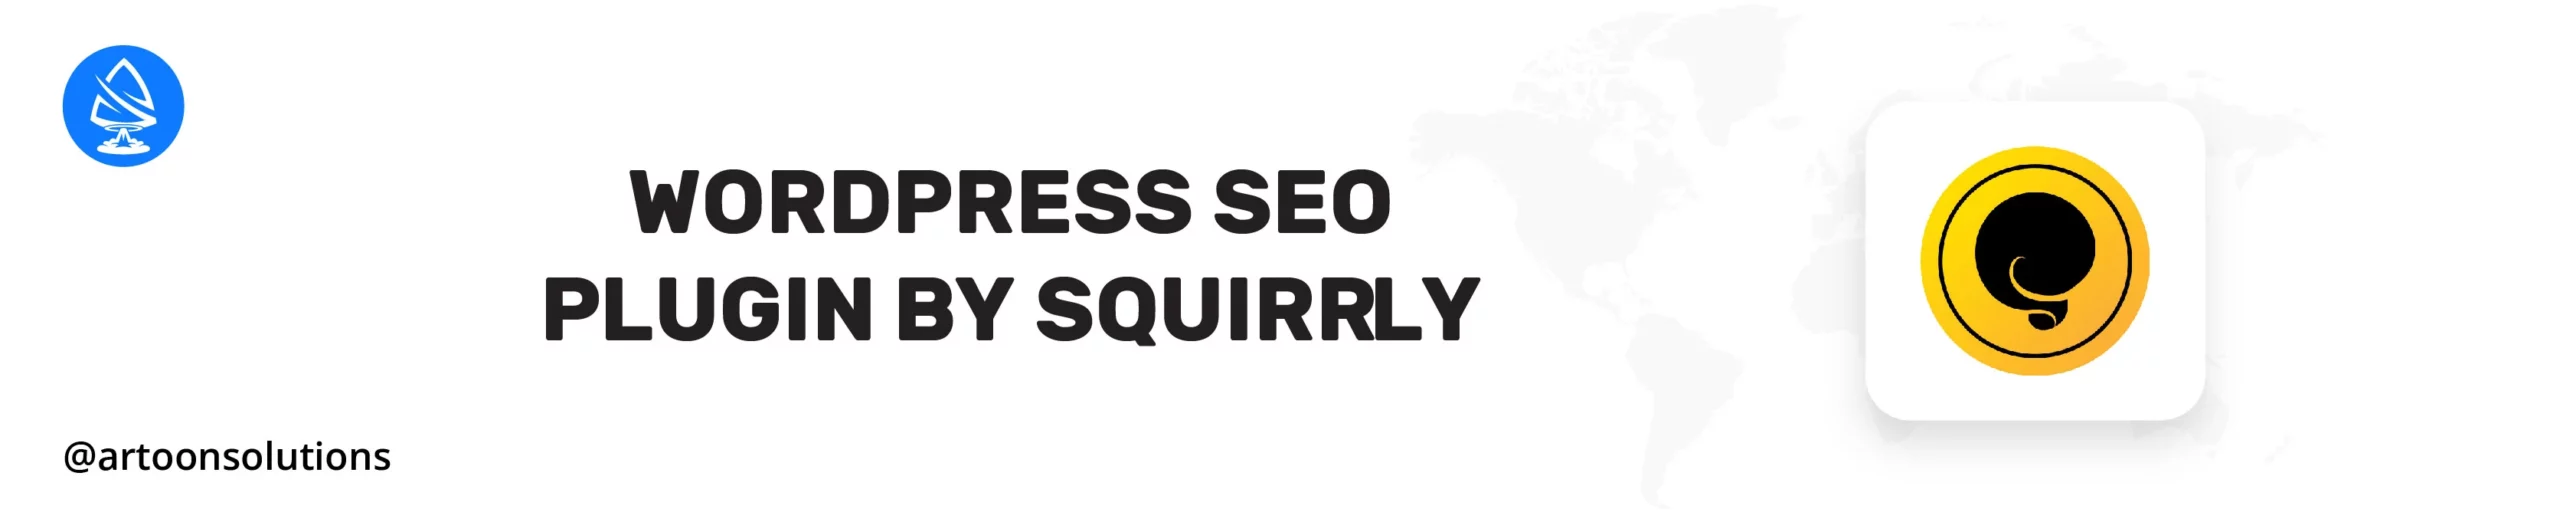 WordPress SEO Plugin by Squirrly